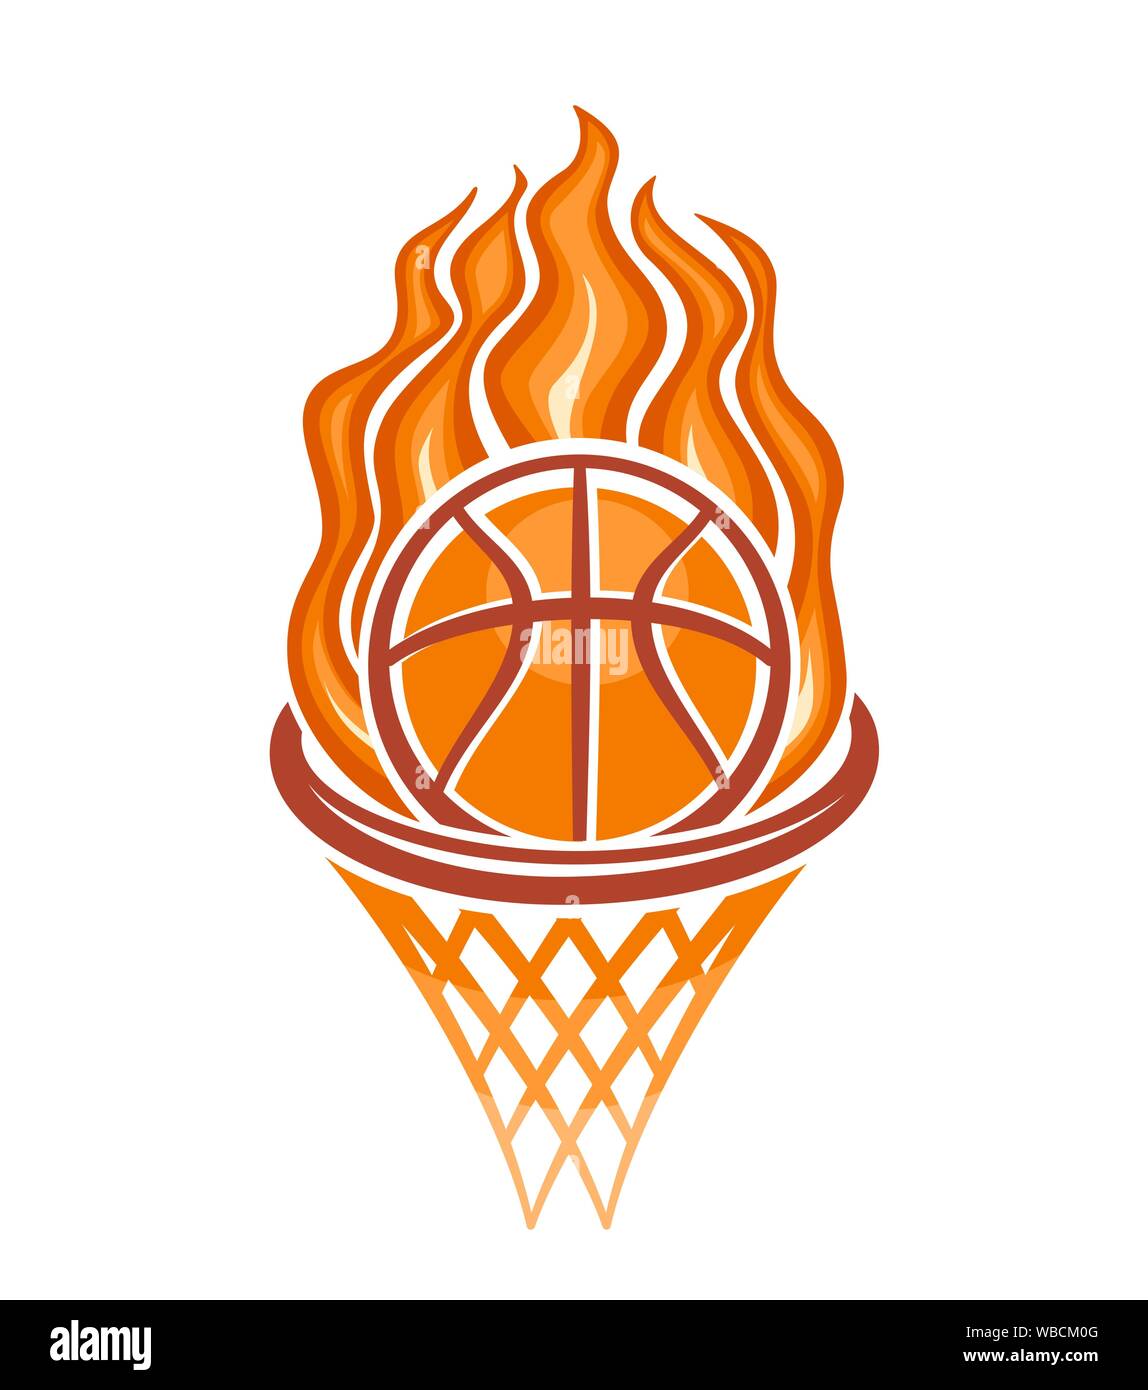 basketball on fire logo